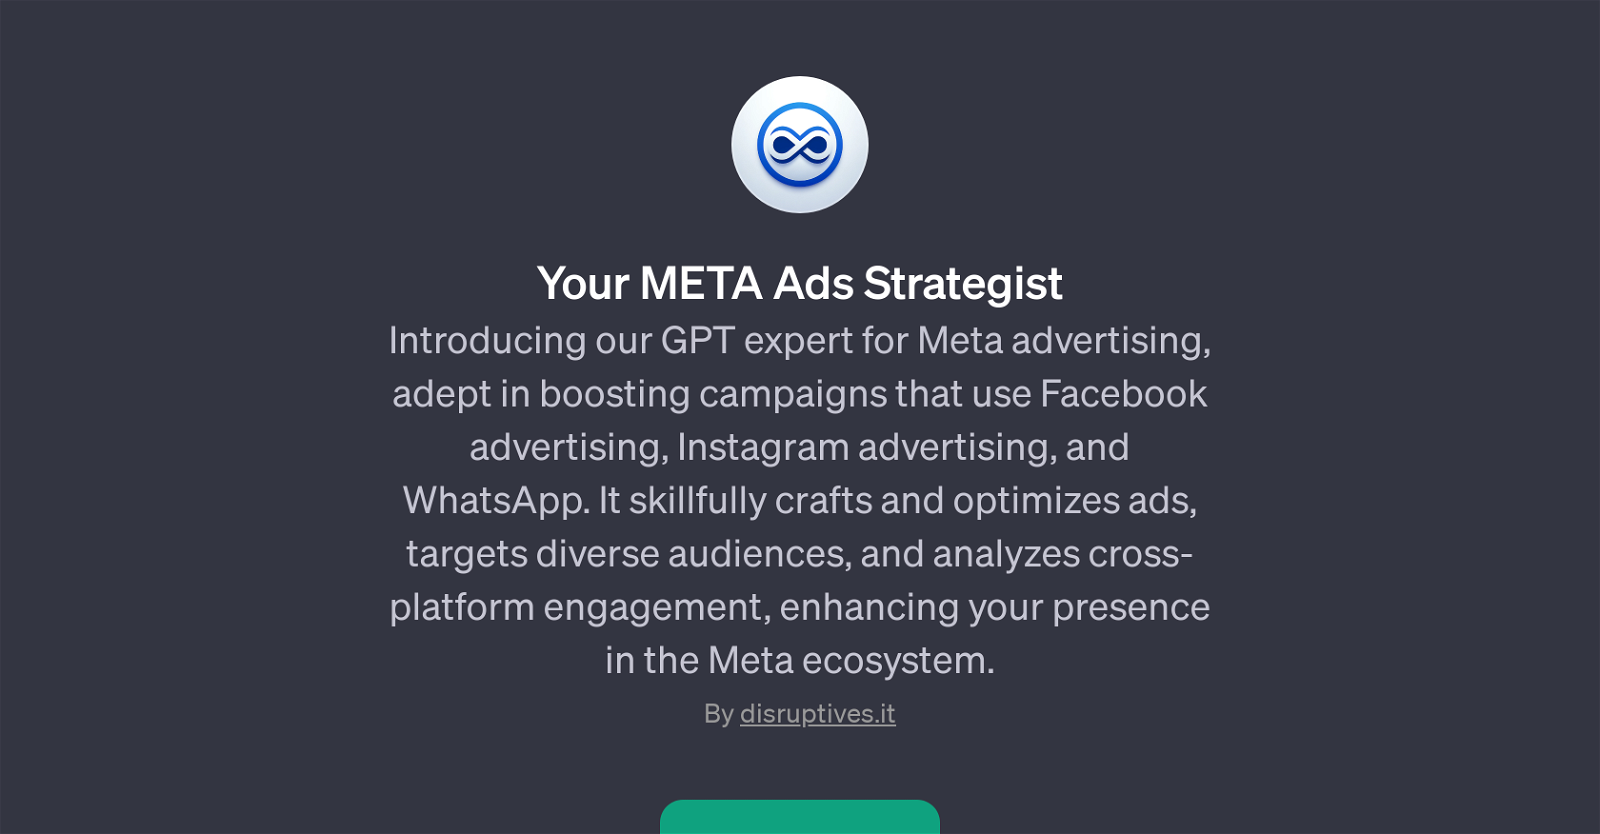 Your META Ads Strategist website